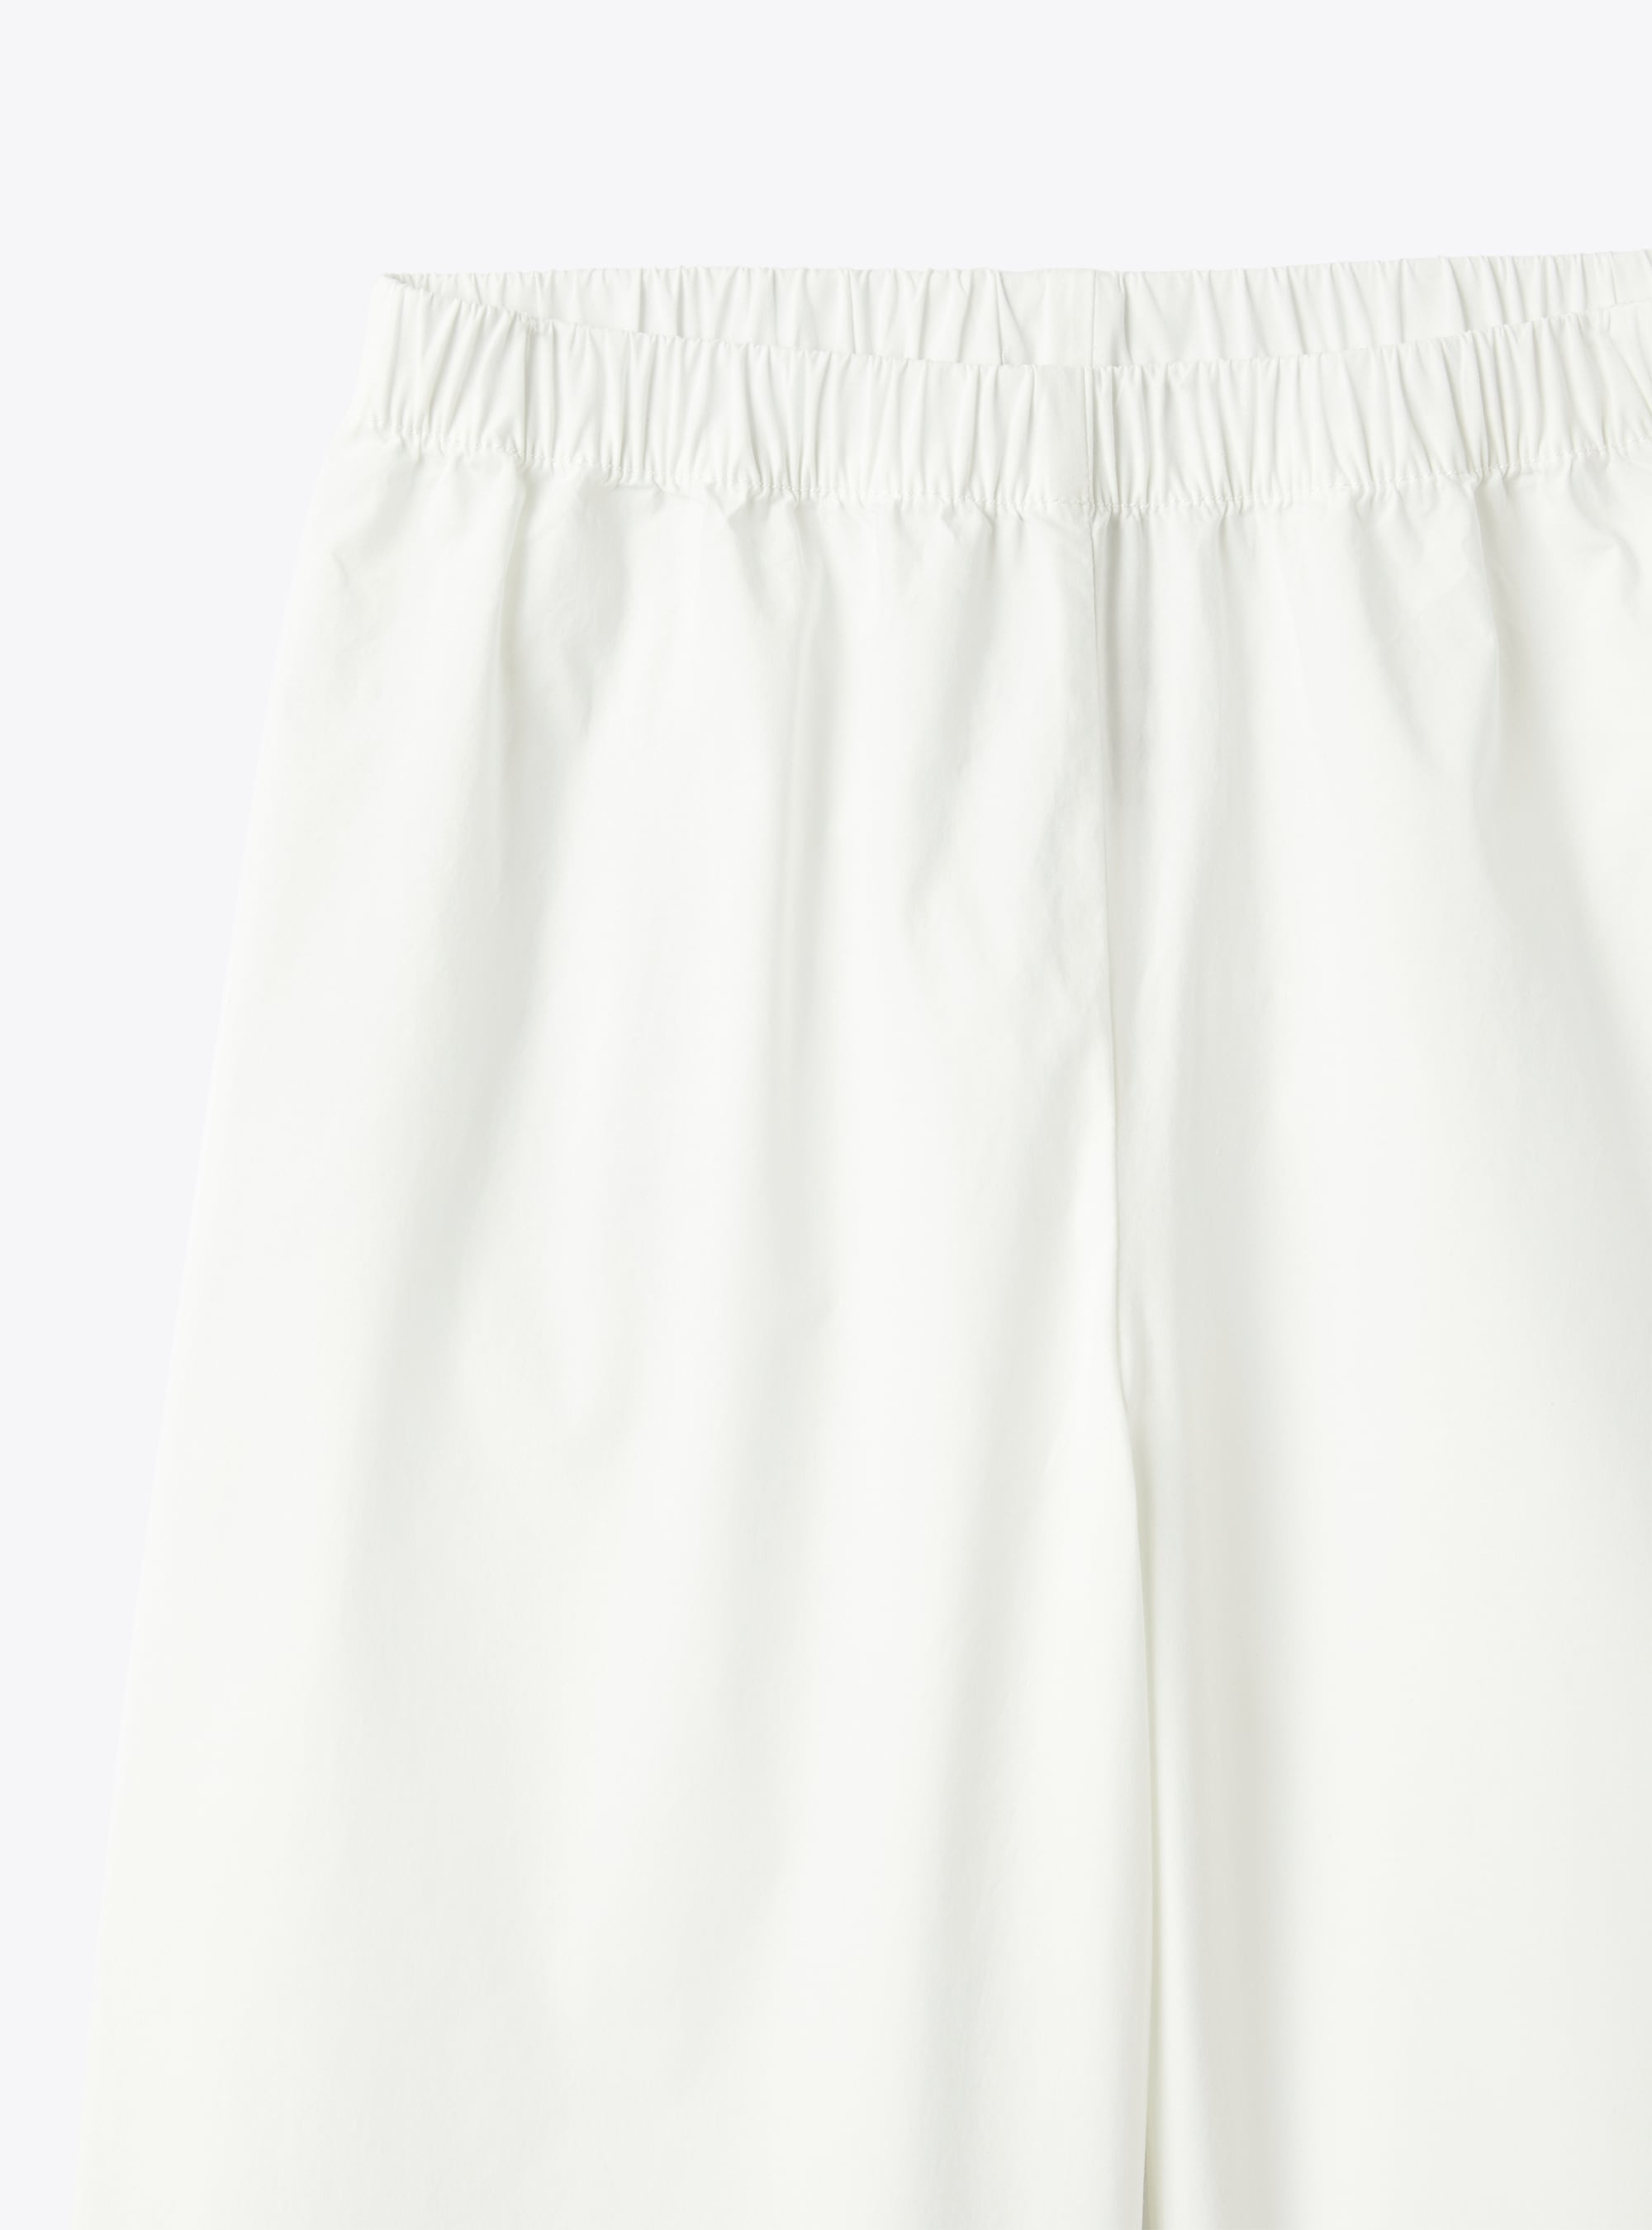 Pantalone capri in popeline stretch bianco - Bianco | Il Gufo